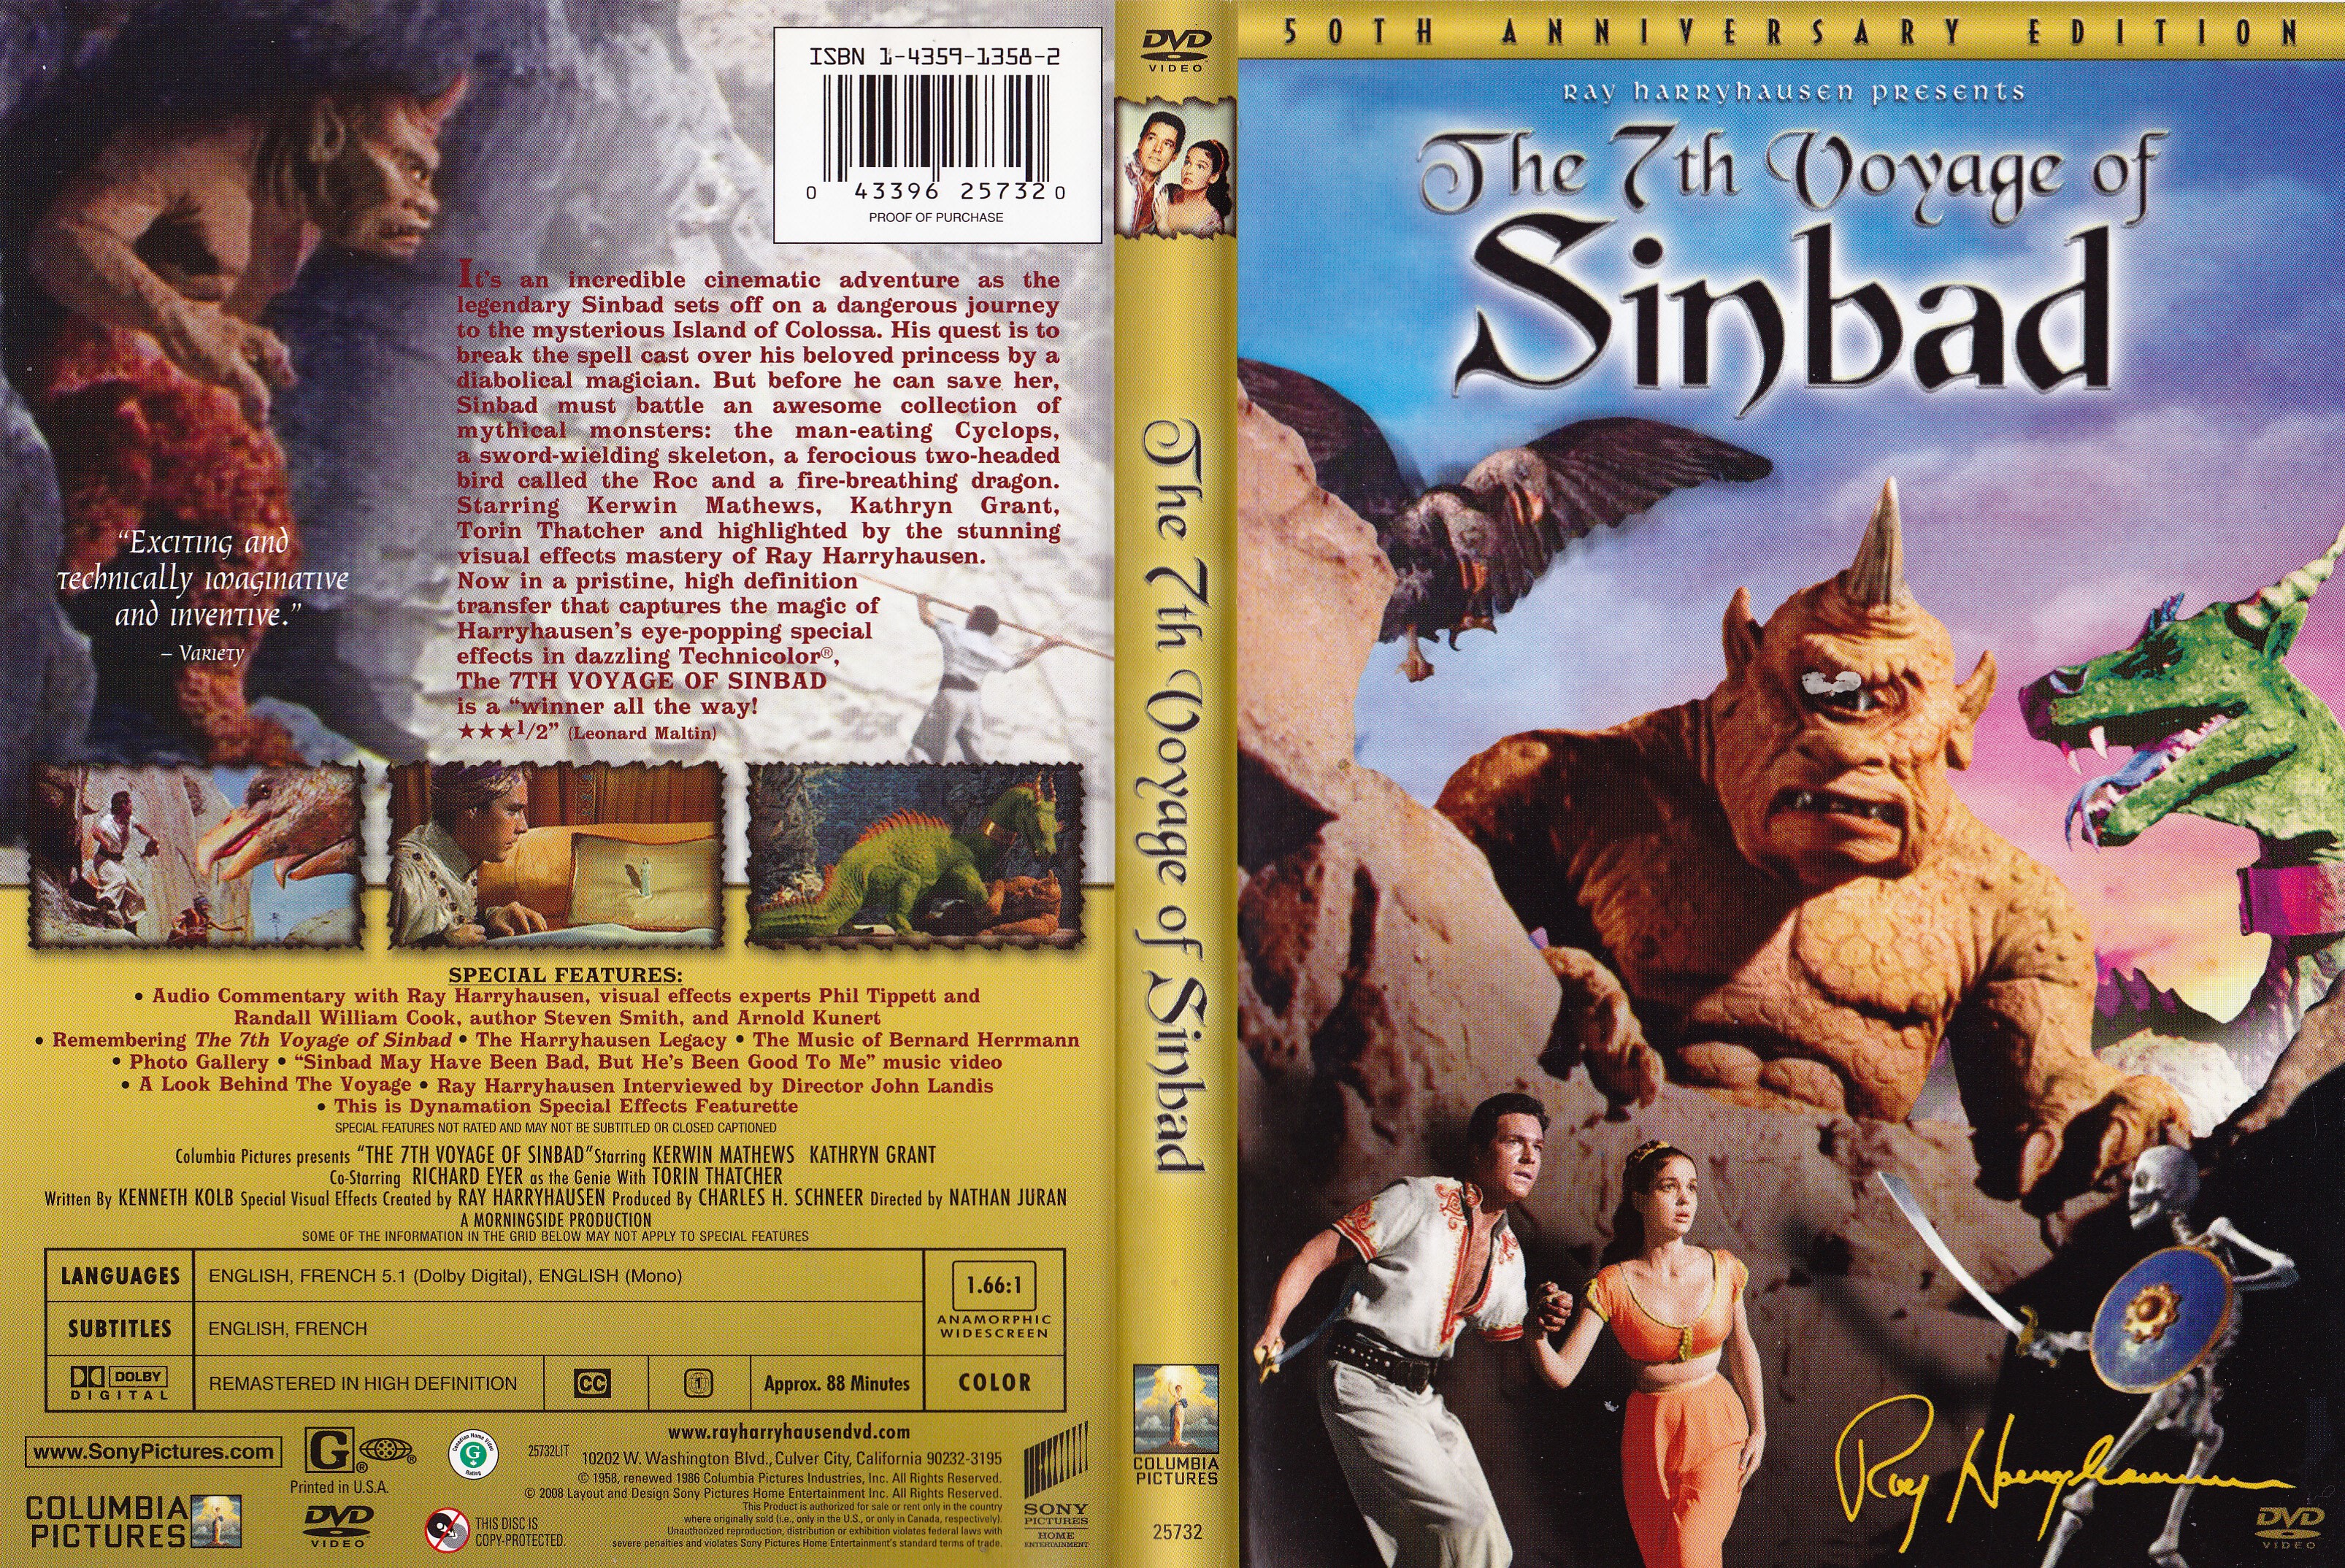 Jaquette DVD The 7th voyage of sinbad - Le 7eme voyage de sinbad (Canadienne)